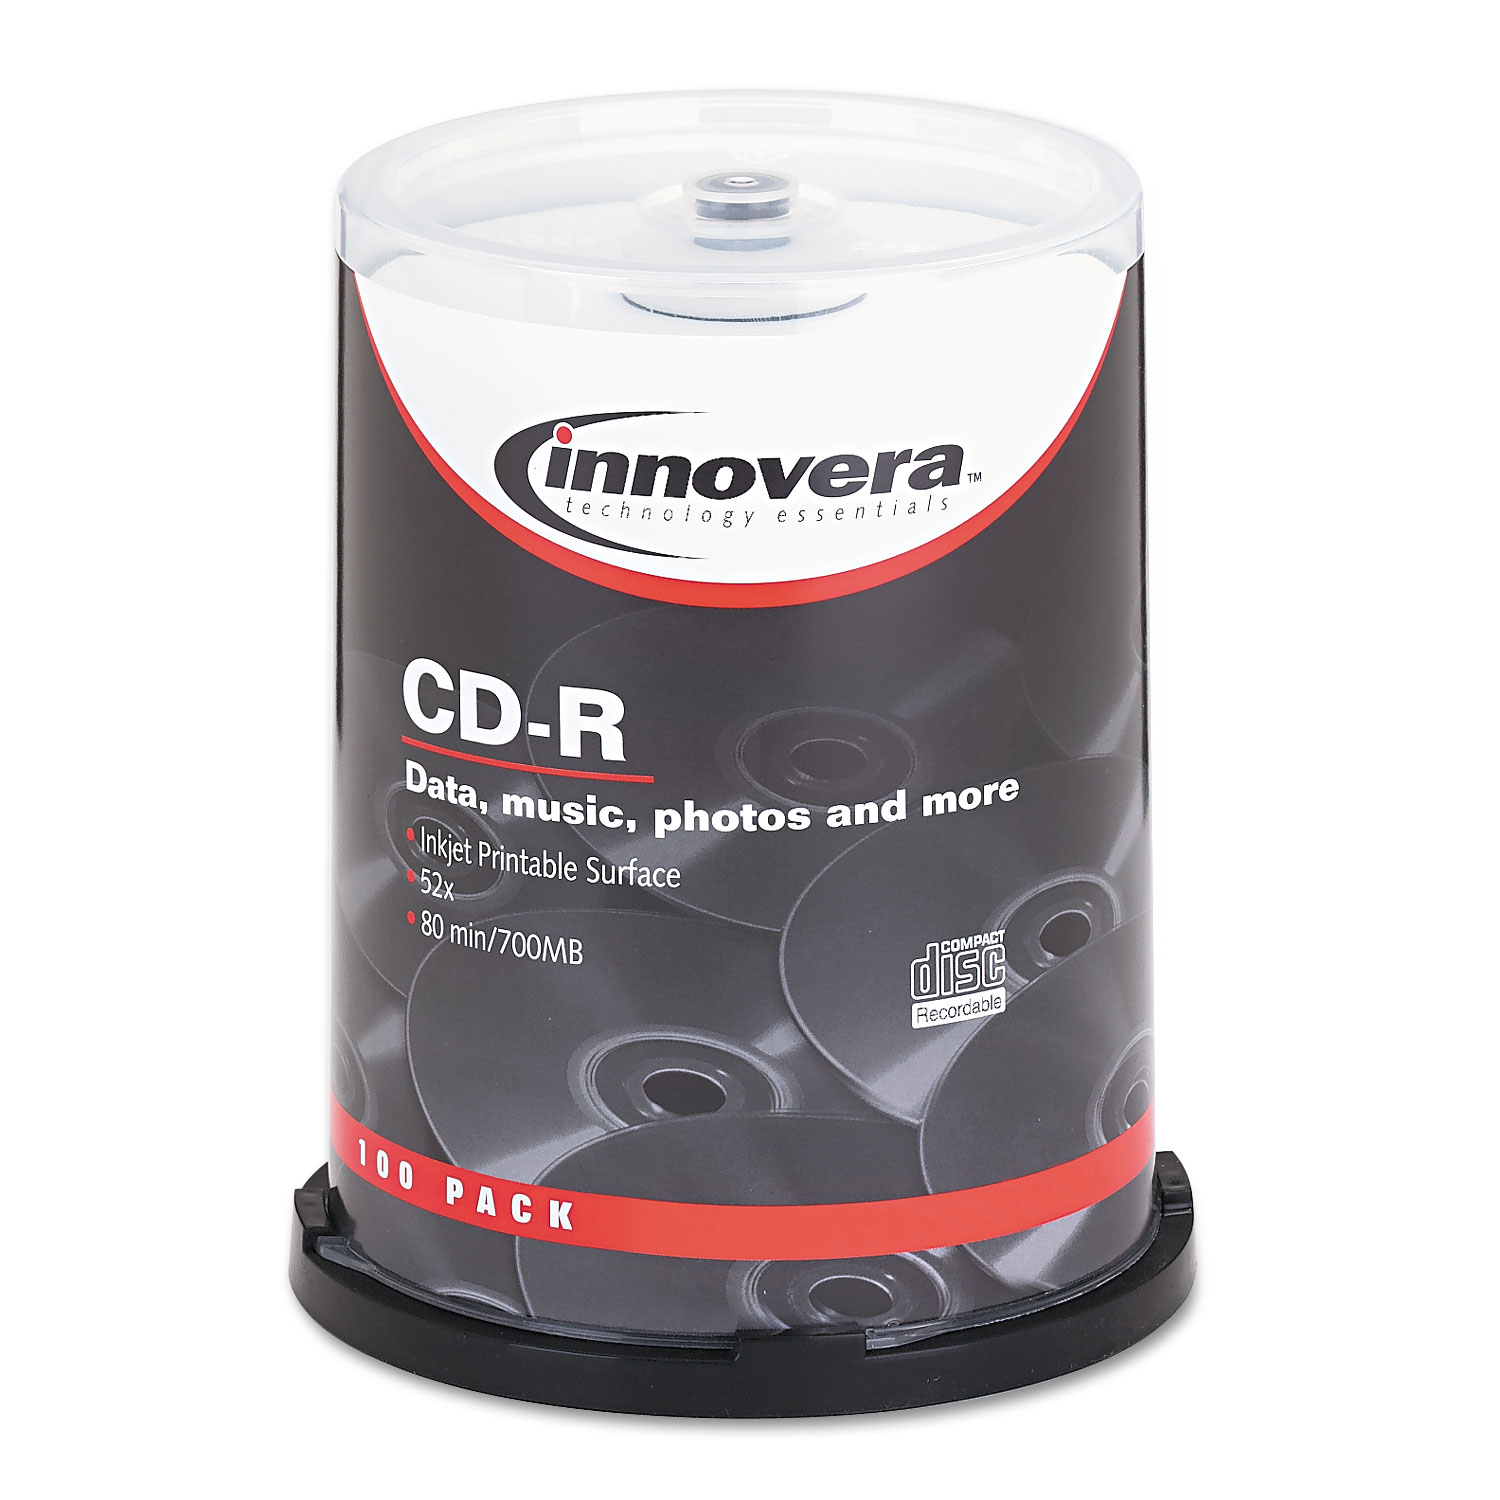  Innovera IVR77815 CD-R Discs, Hub Printable, 700MB/80min, 52x, Spindle, Matte White, 100/Pack (IVR77815) 